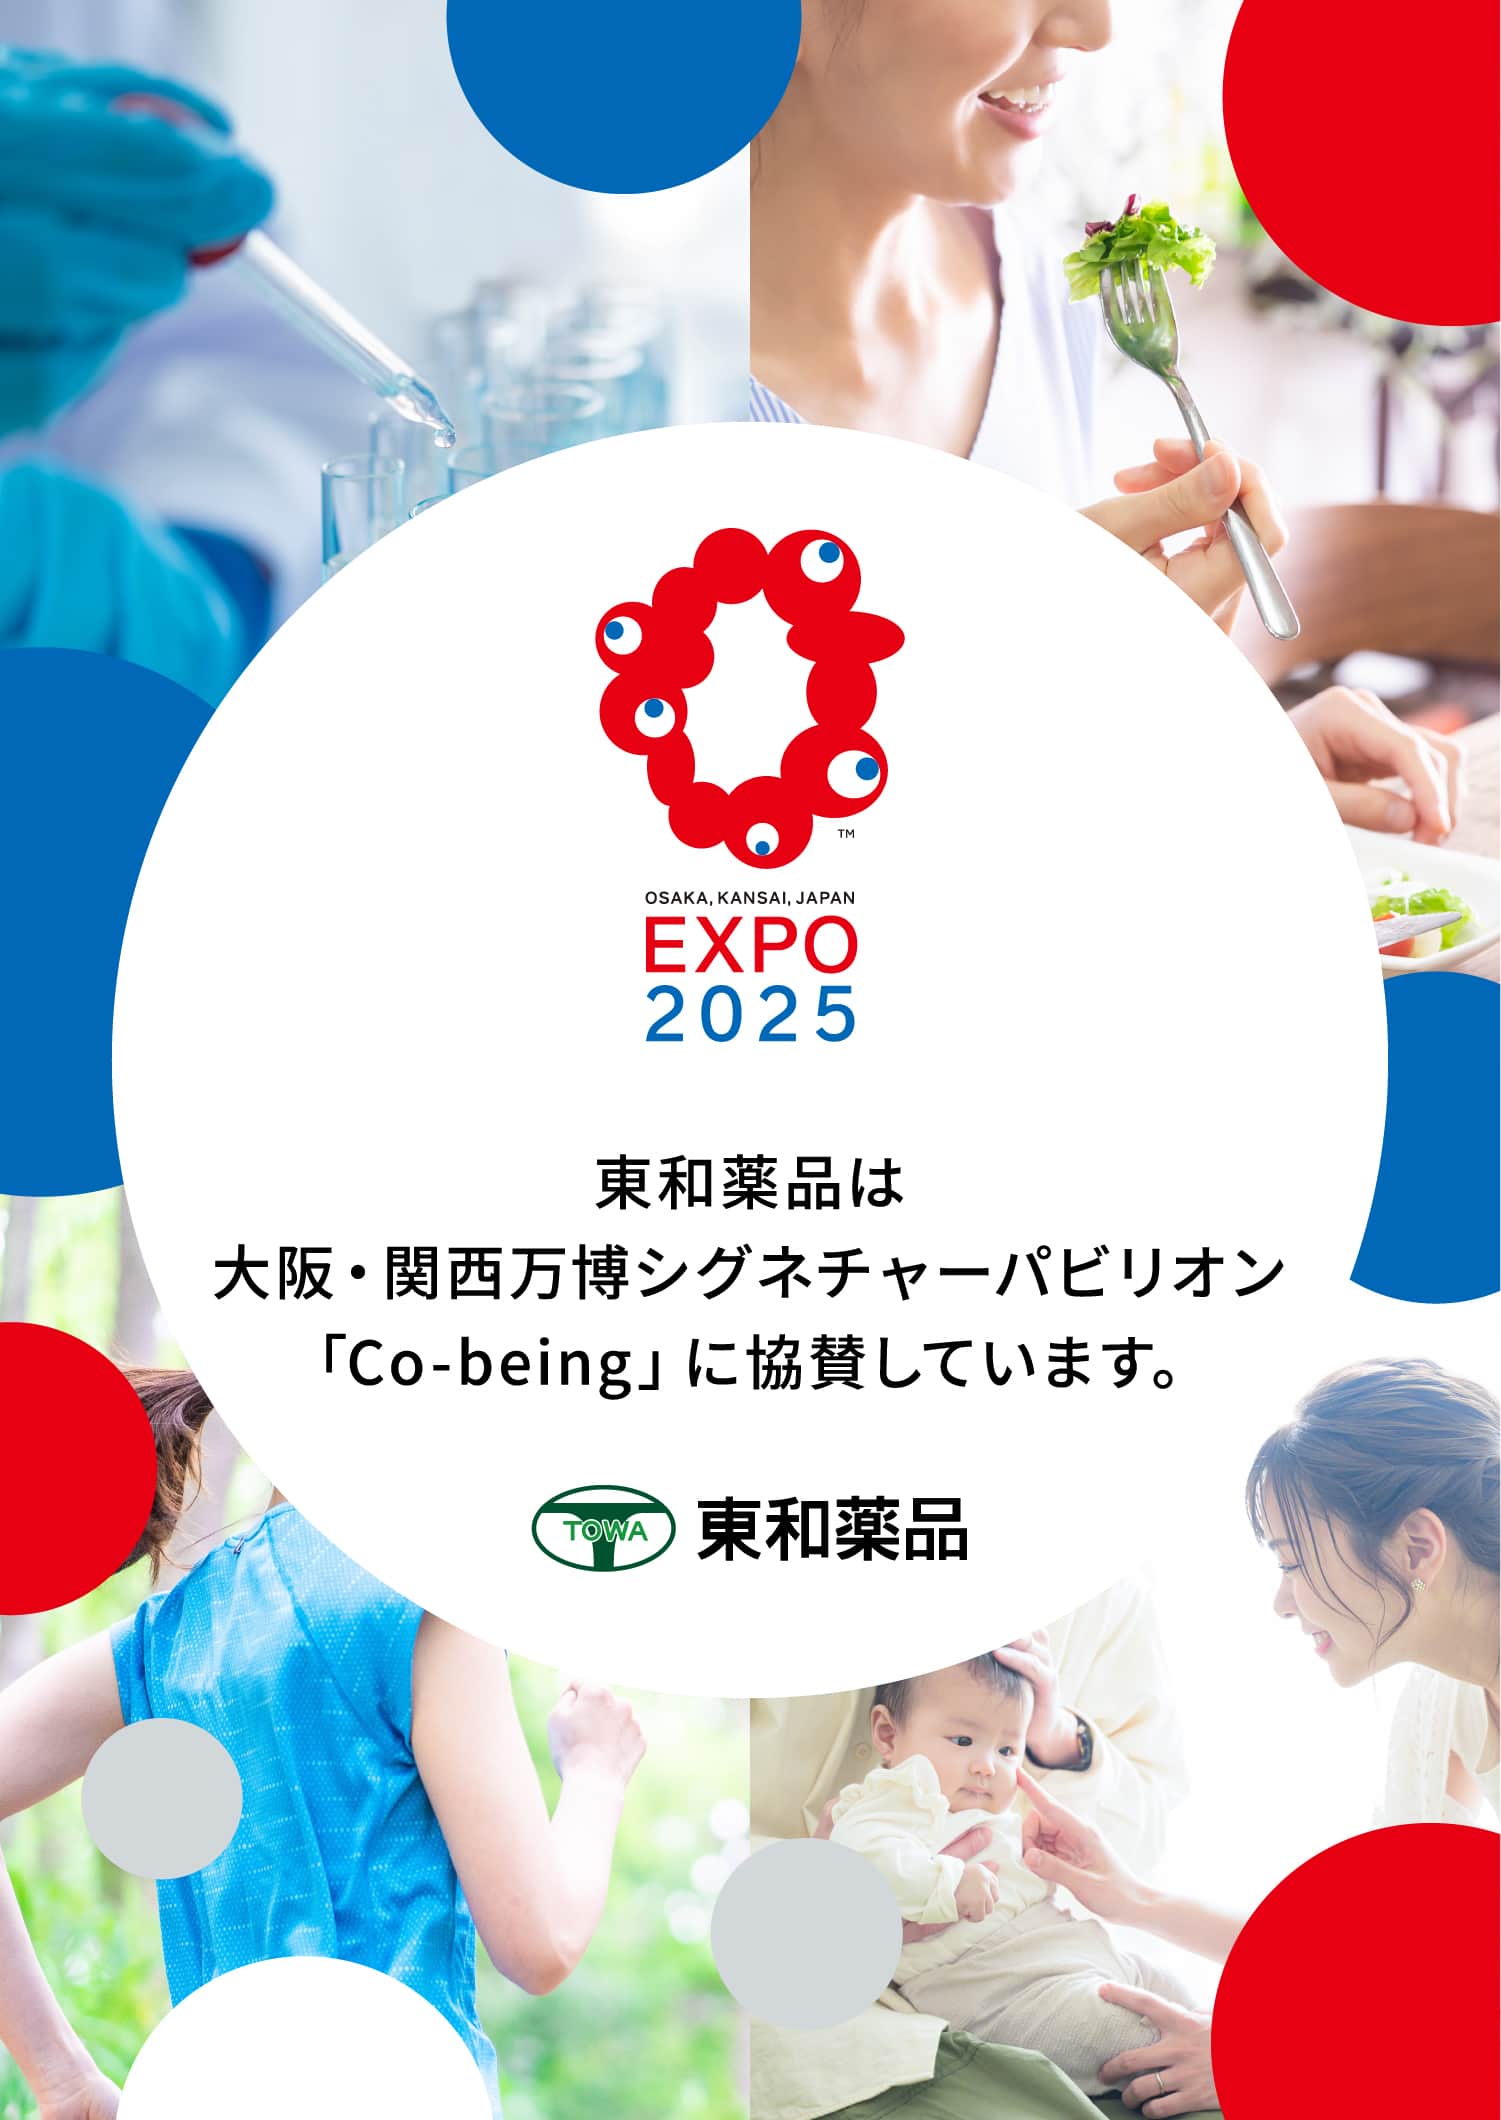 EXPO 2025 東和薬品は大阪・関西万博シグネチャーパビリオンシグネチャーパビリオン「Co-being」に協賛しています.東和薬品